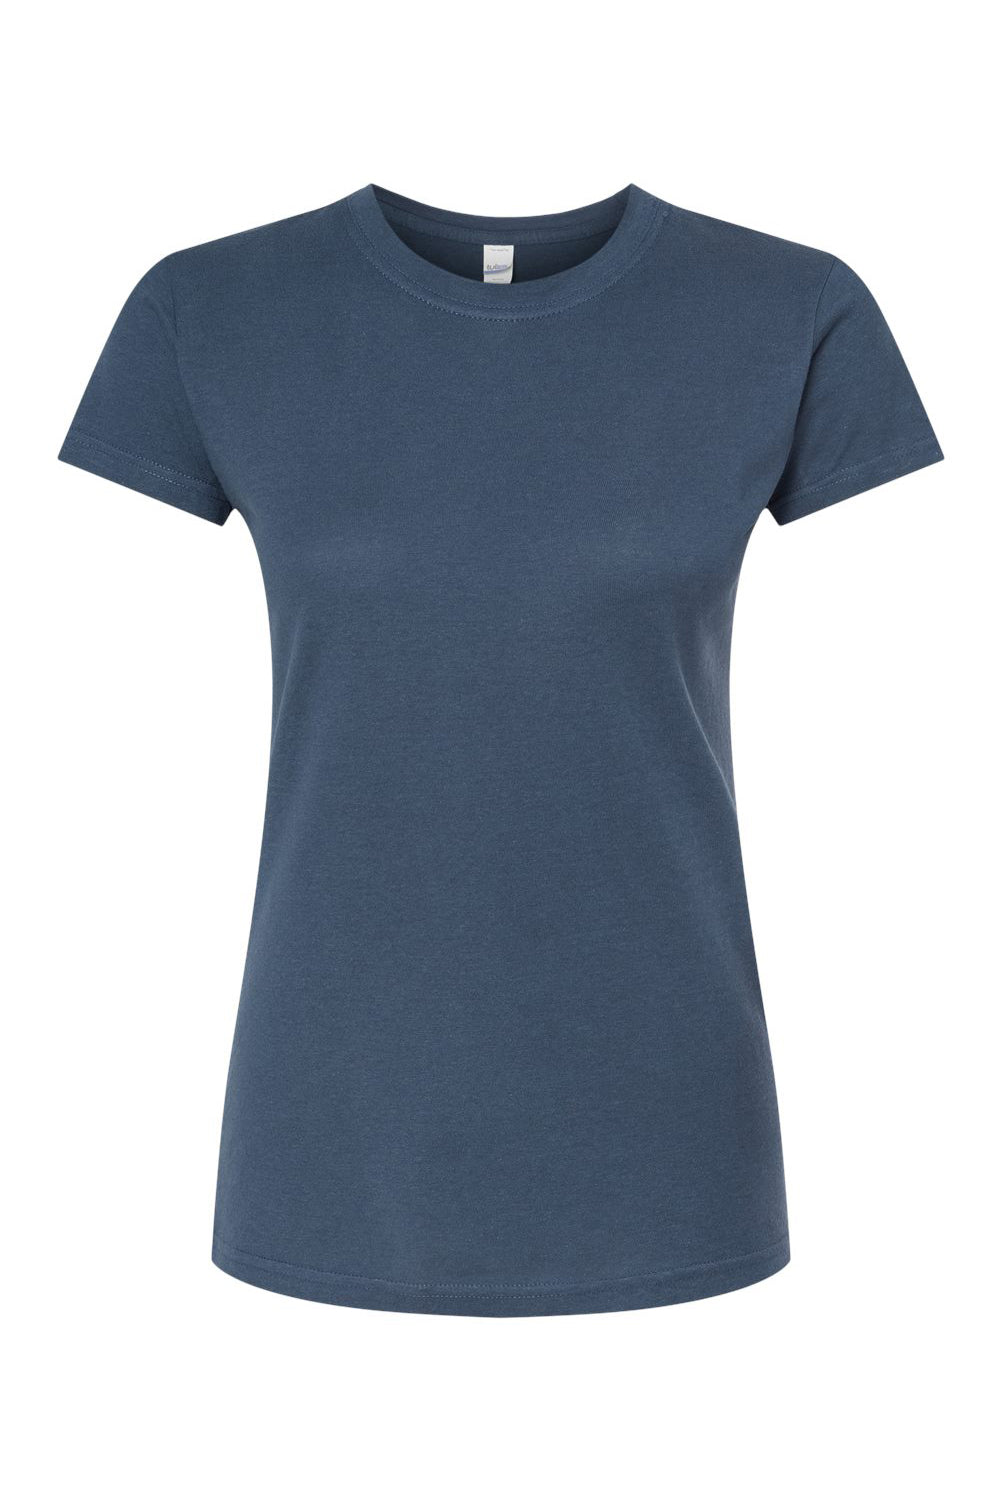 Tultex 213 Womens Fine Jersey Slim Fit Short Sleeve Crewneck T-Shirt Indigo Blue Flat Front